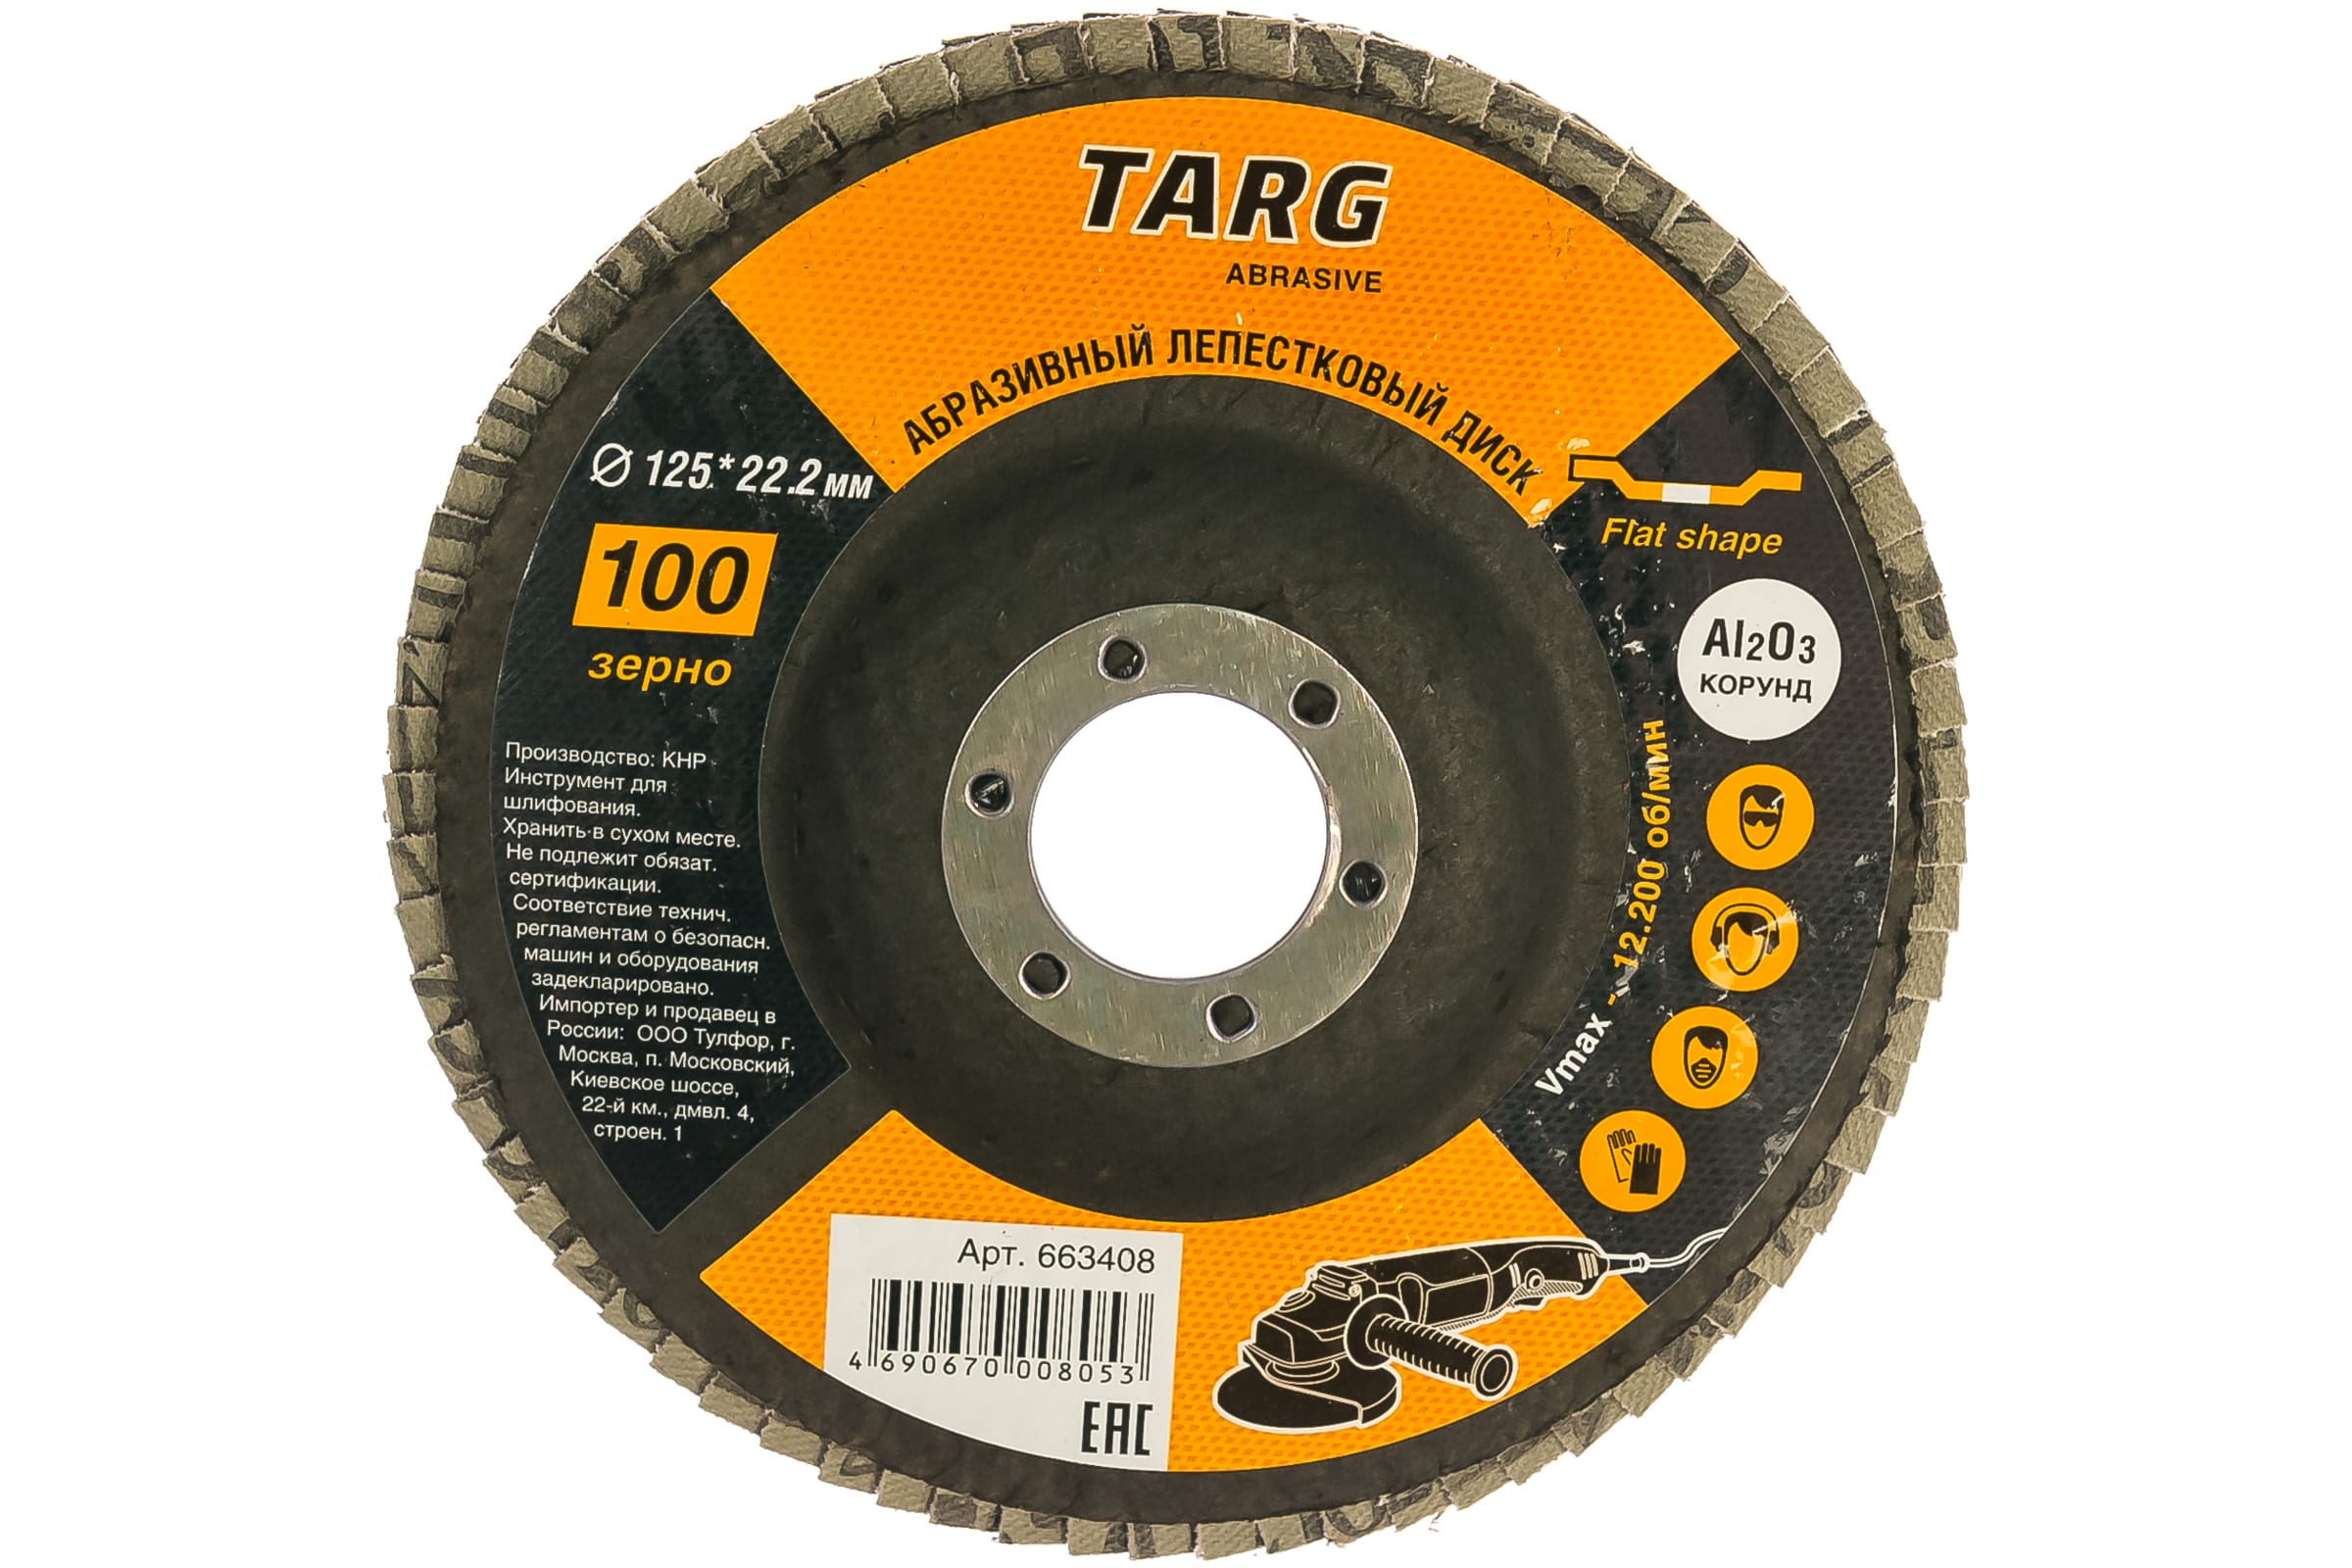 фото Targ диск лепестковый абразивный 125х22,2мм, зерно 100 663408